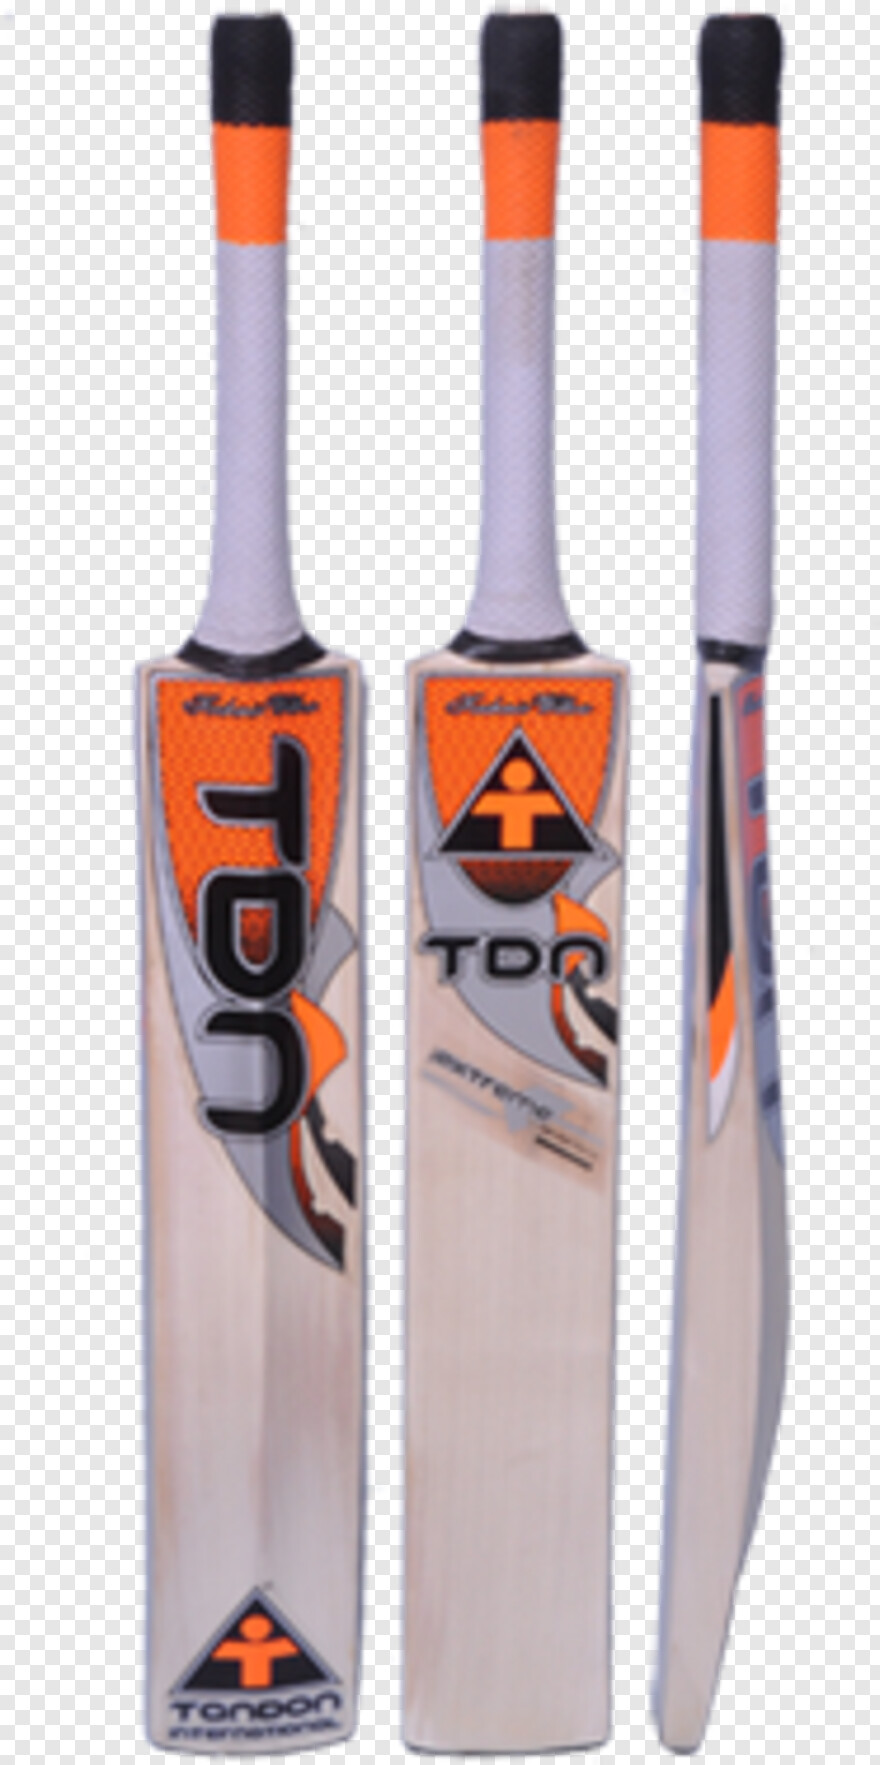  Cricket Clipart, Cricket Bat And Ball, Cricket Vector, Cricket Cup, Cricket Images, Cricket Kit